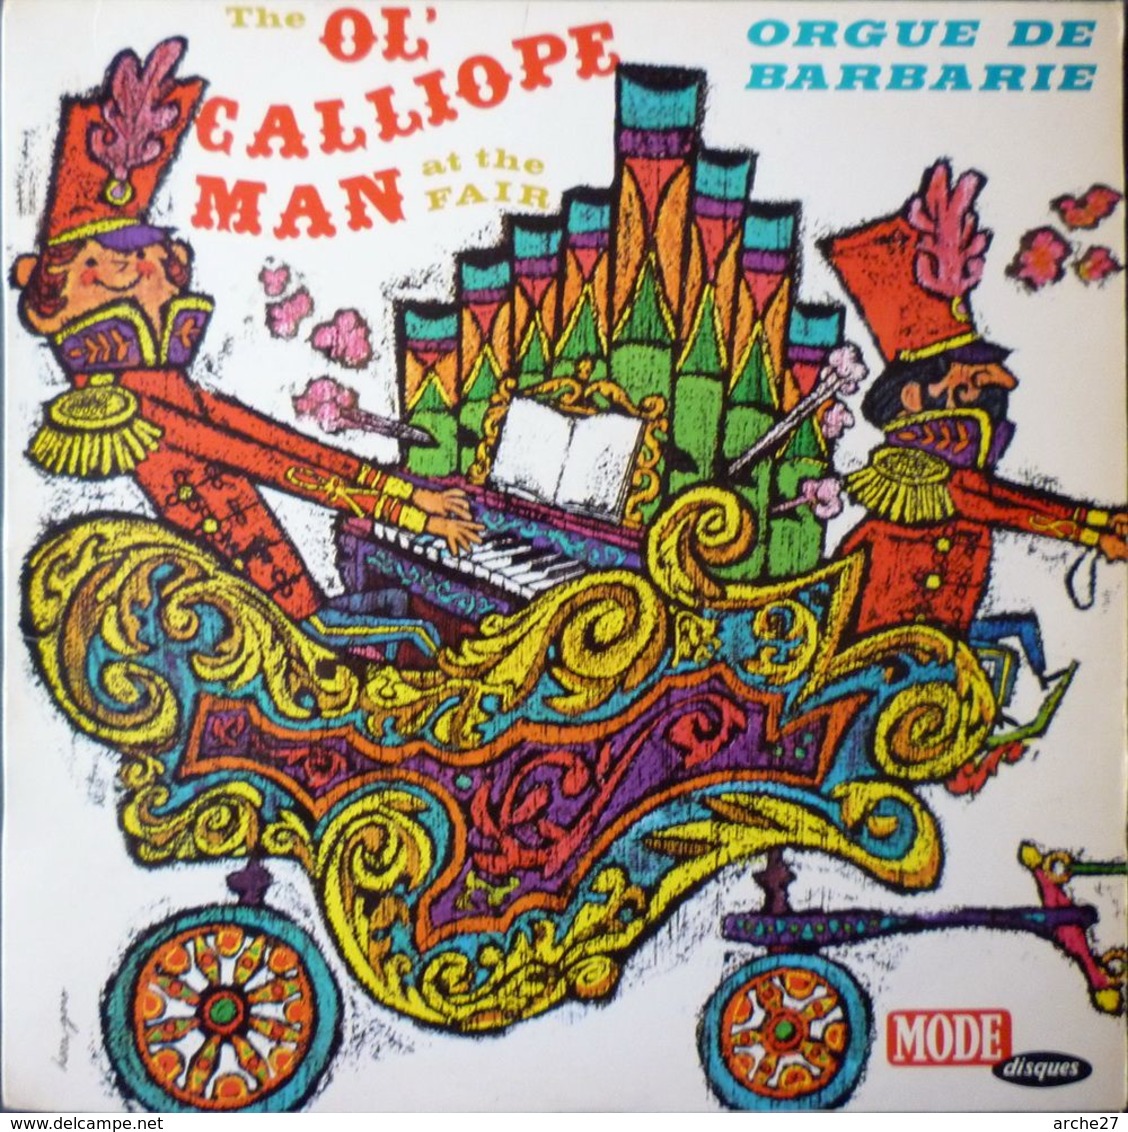 ORGUE DE BARBARIE - LP - 33T - Disque Vinyle - Ol' Galliope Man At The Fair - 9397 - Musicals